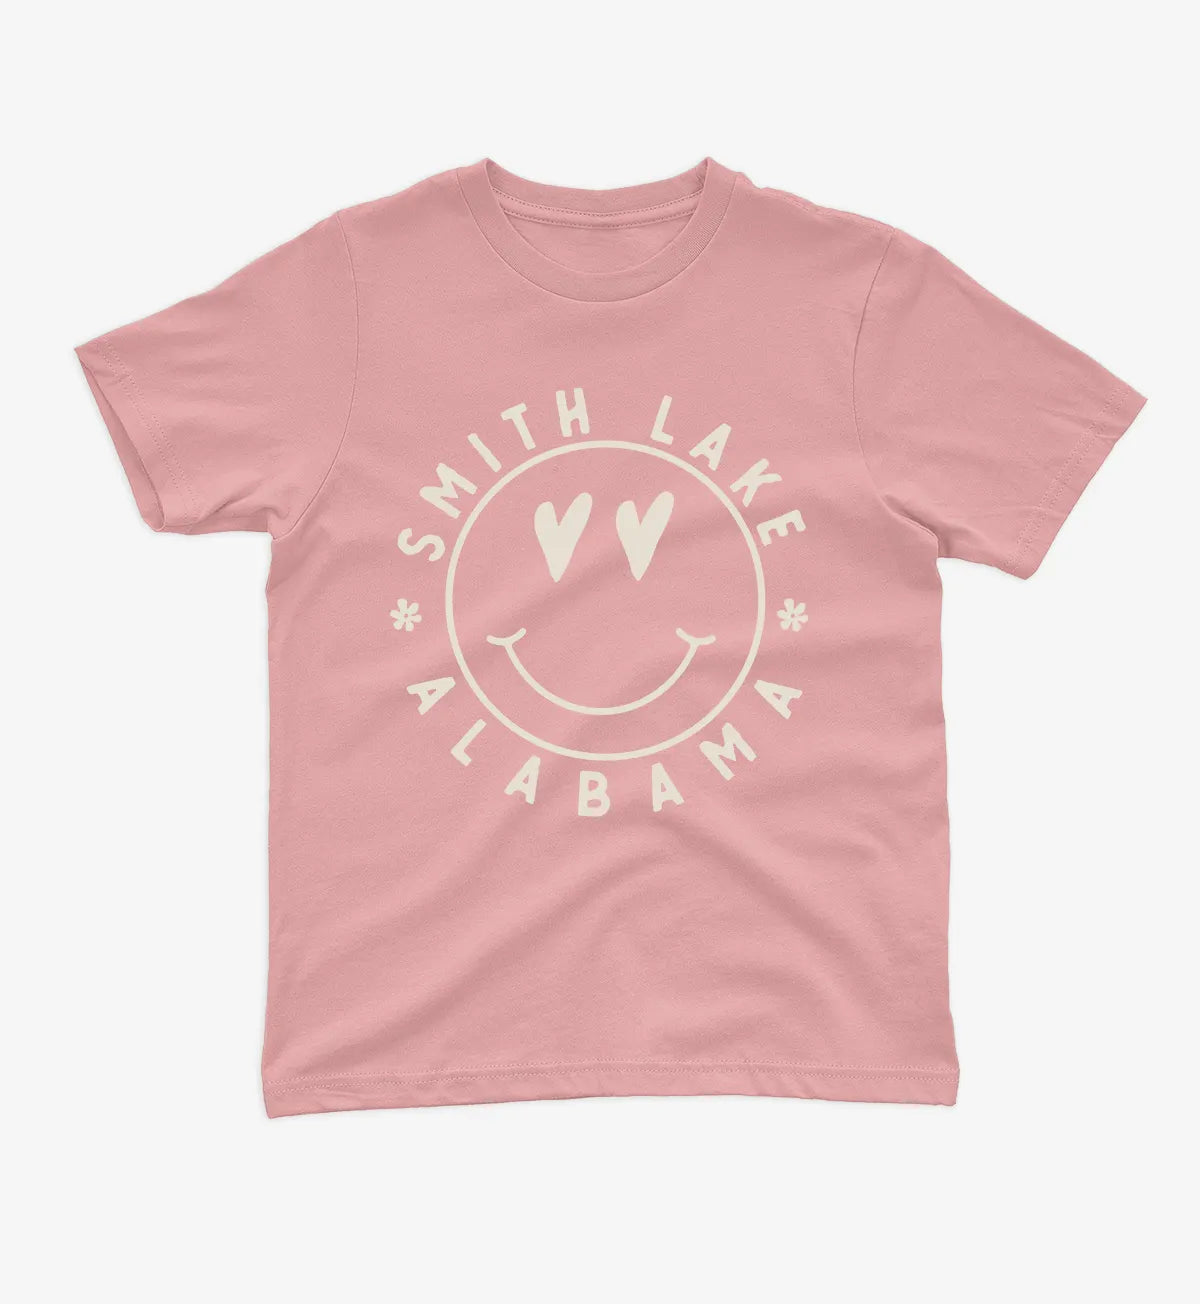 YOUTH Smiley Smith - Smith Lake Tshirt